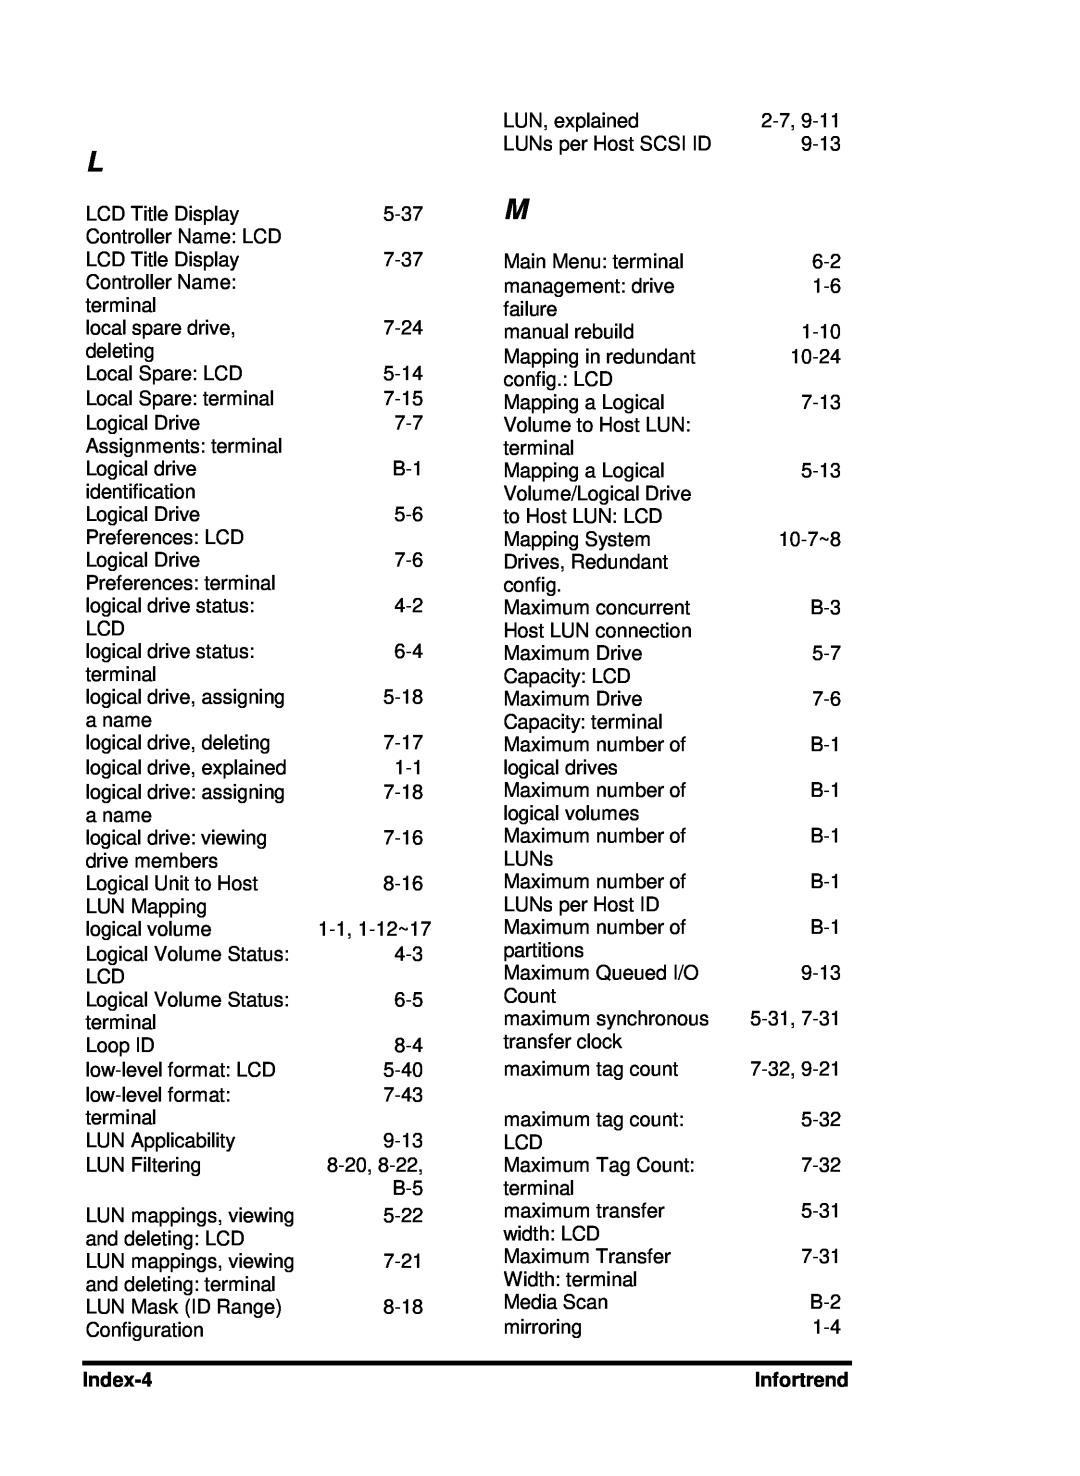 Compaq Infortrend manual Index-4 